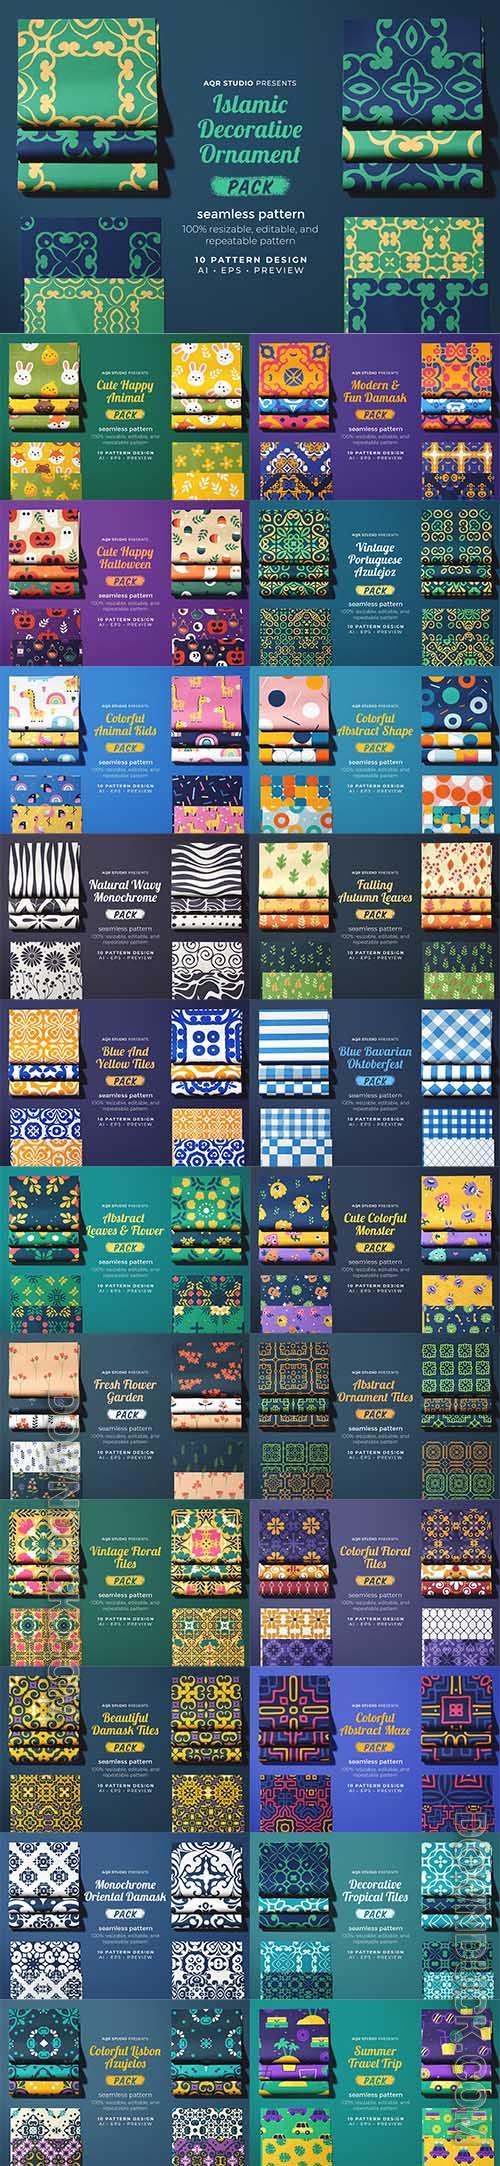 270 Different Samless Patterns Pack